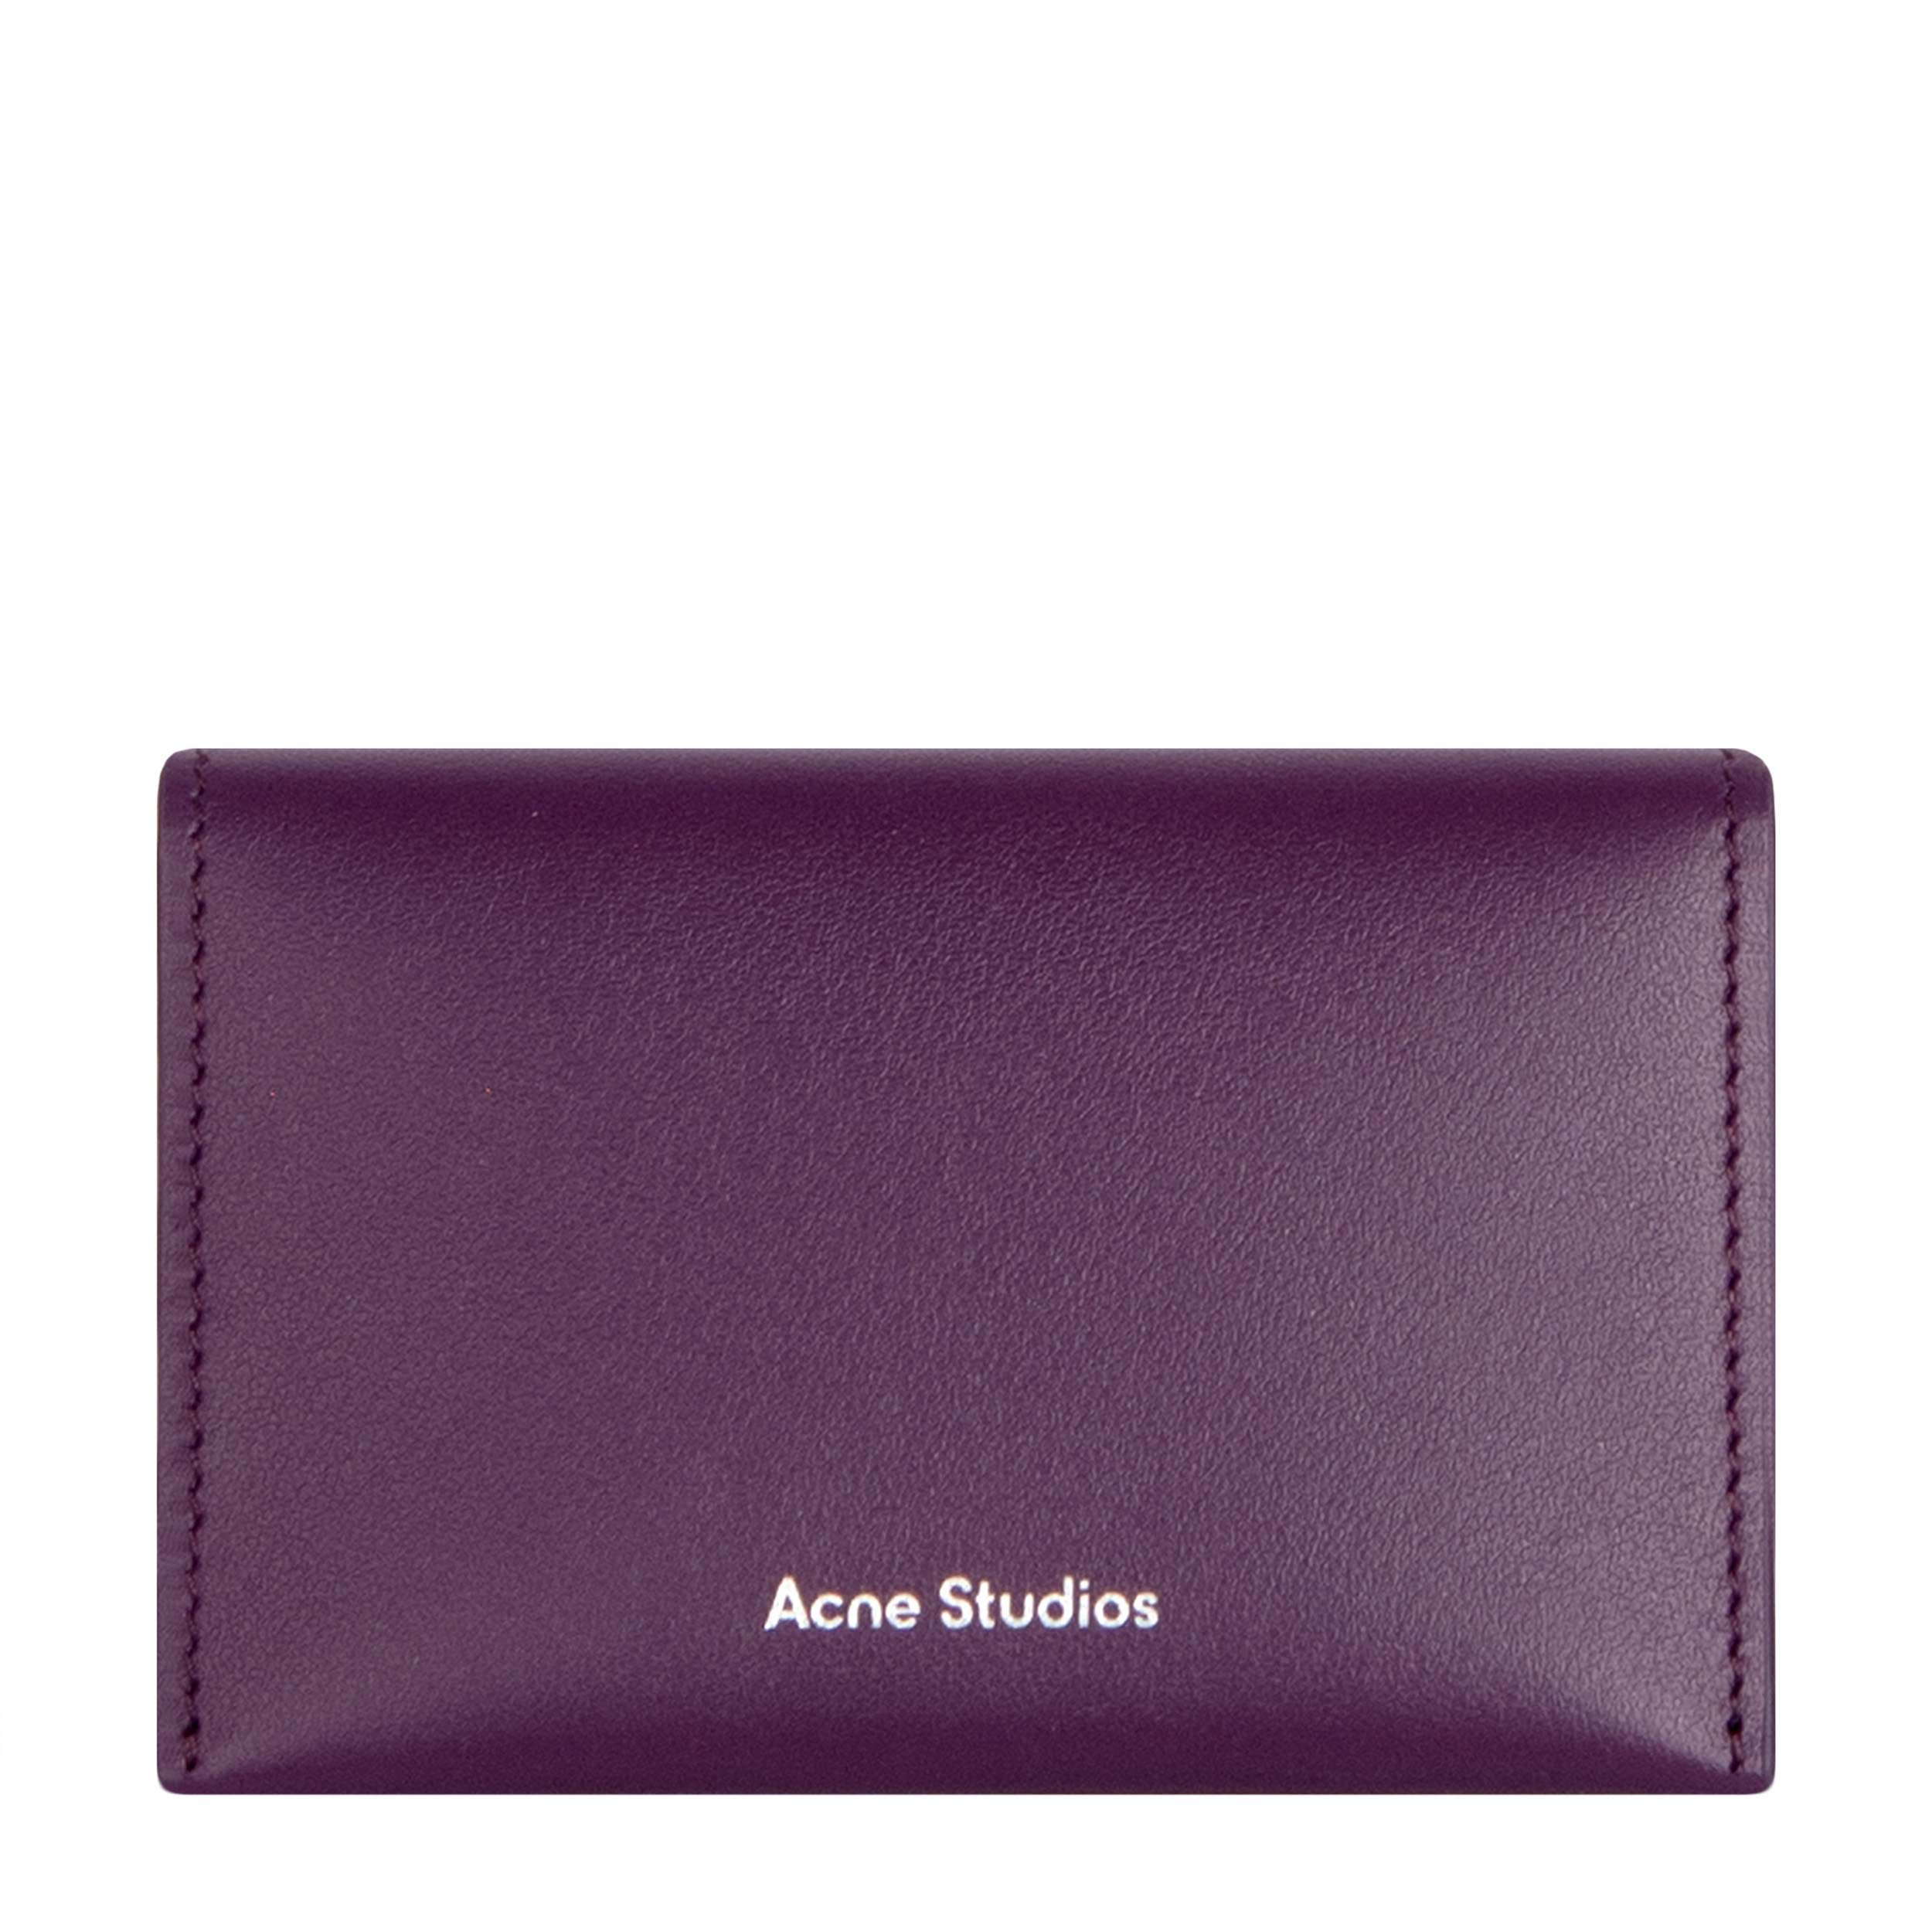 Acne Studios Leather Card Holder Violet Purple